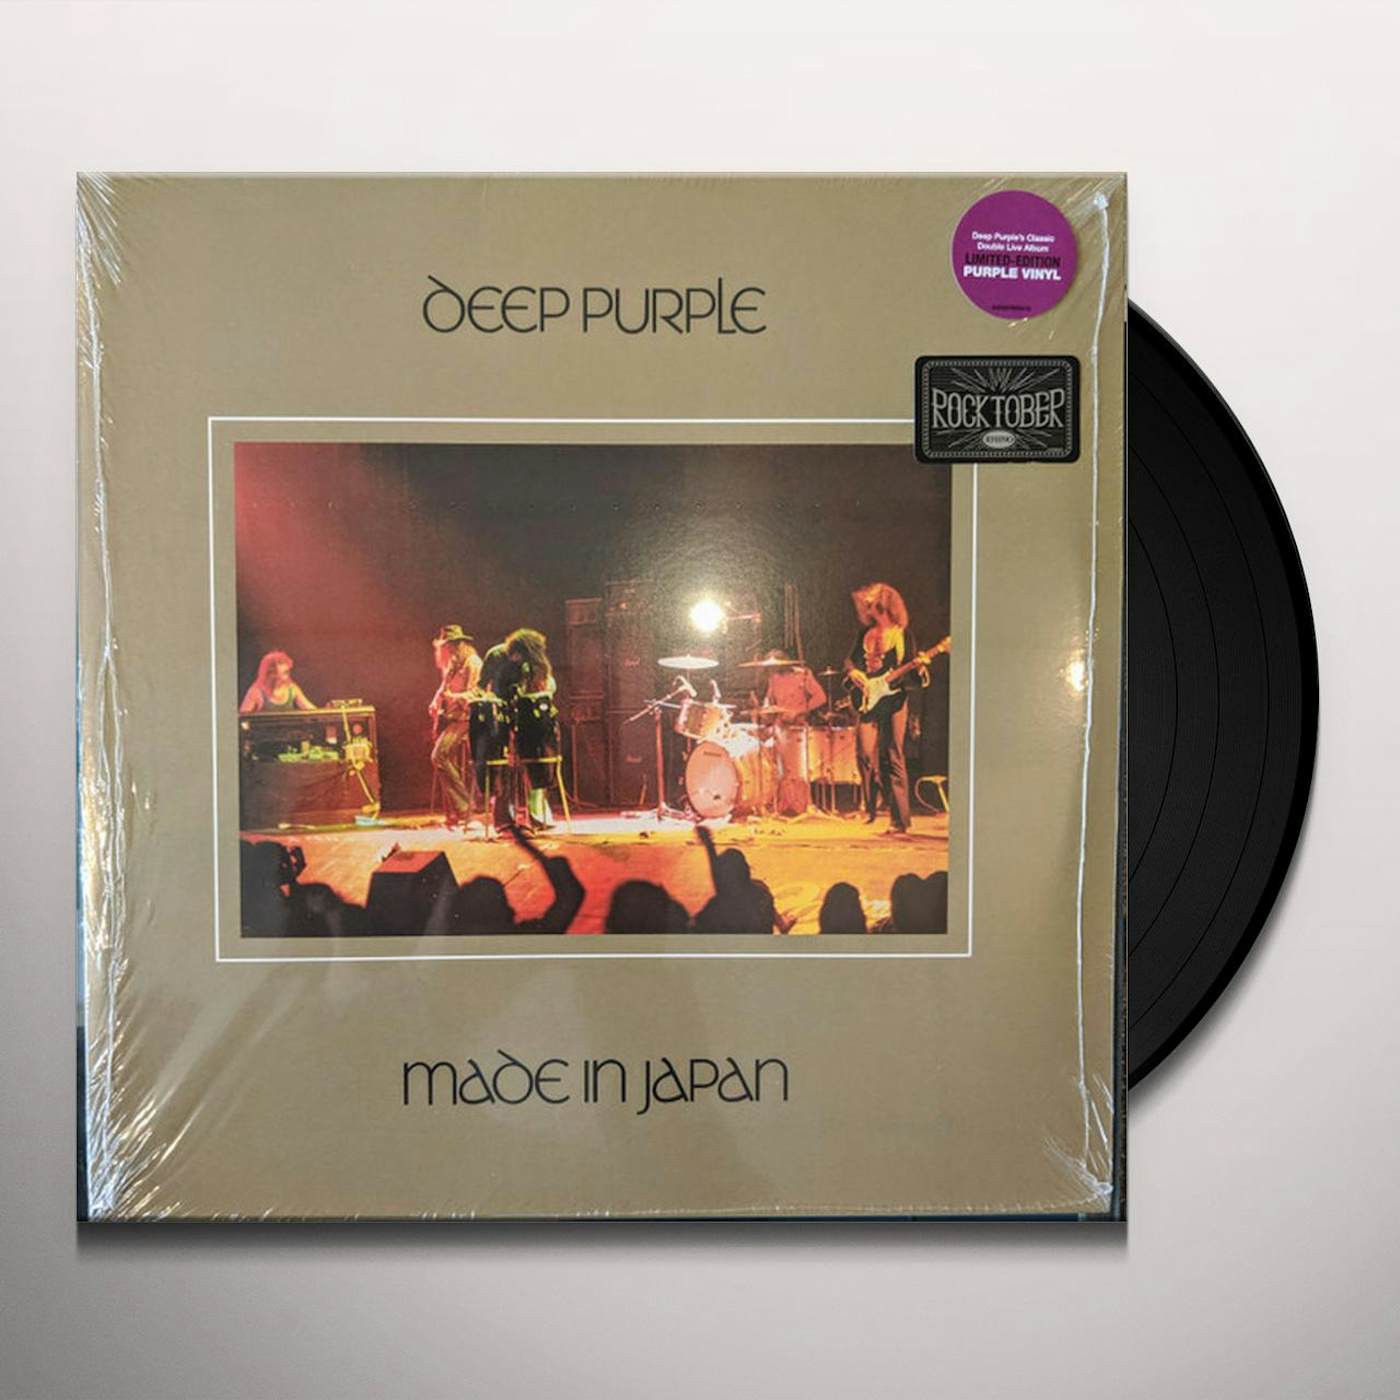 Deep Purple MADE IN JAPAN (2LP/PURPLE VINYL) (ROCKTOBER) Vinyl Record